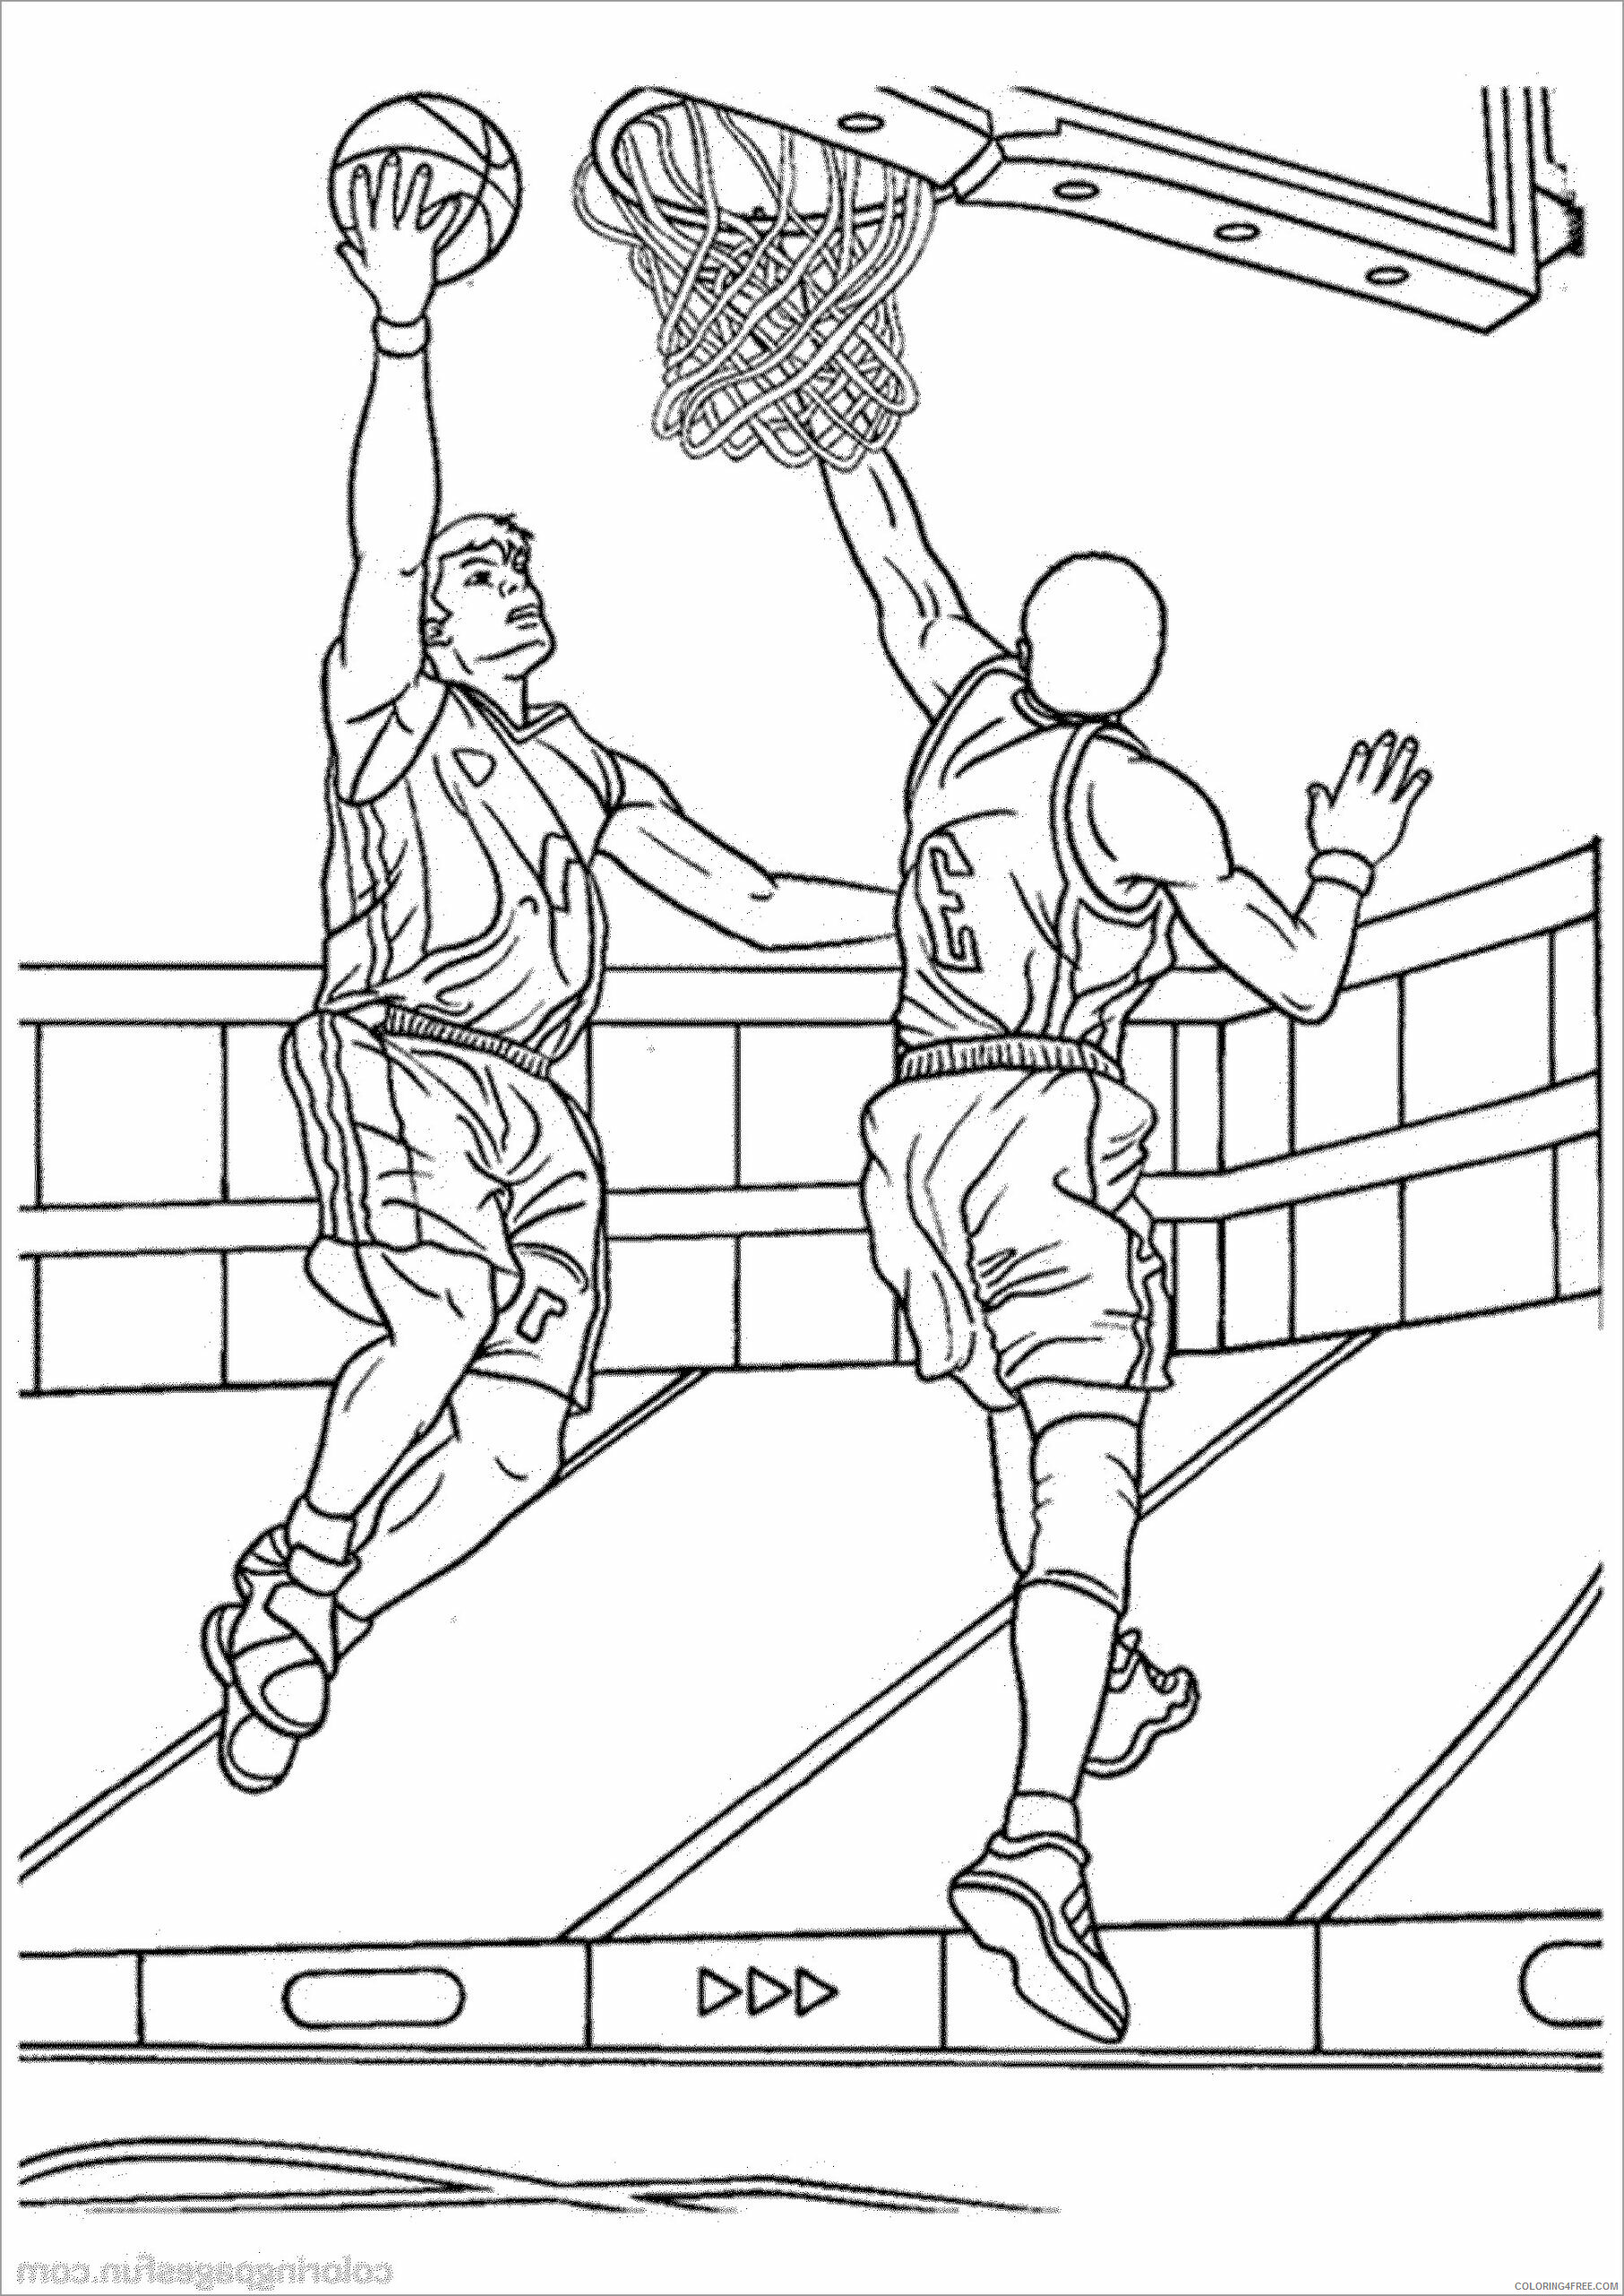 Basketball Coloring Pages basketball to print Printable 2021 0803 Coloring4free